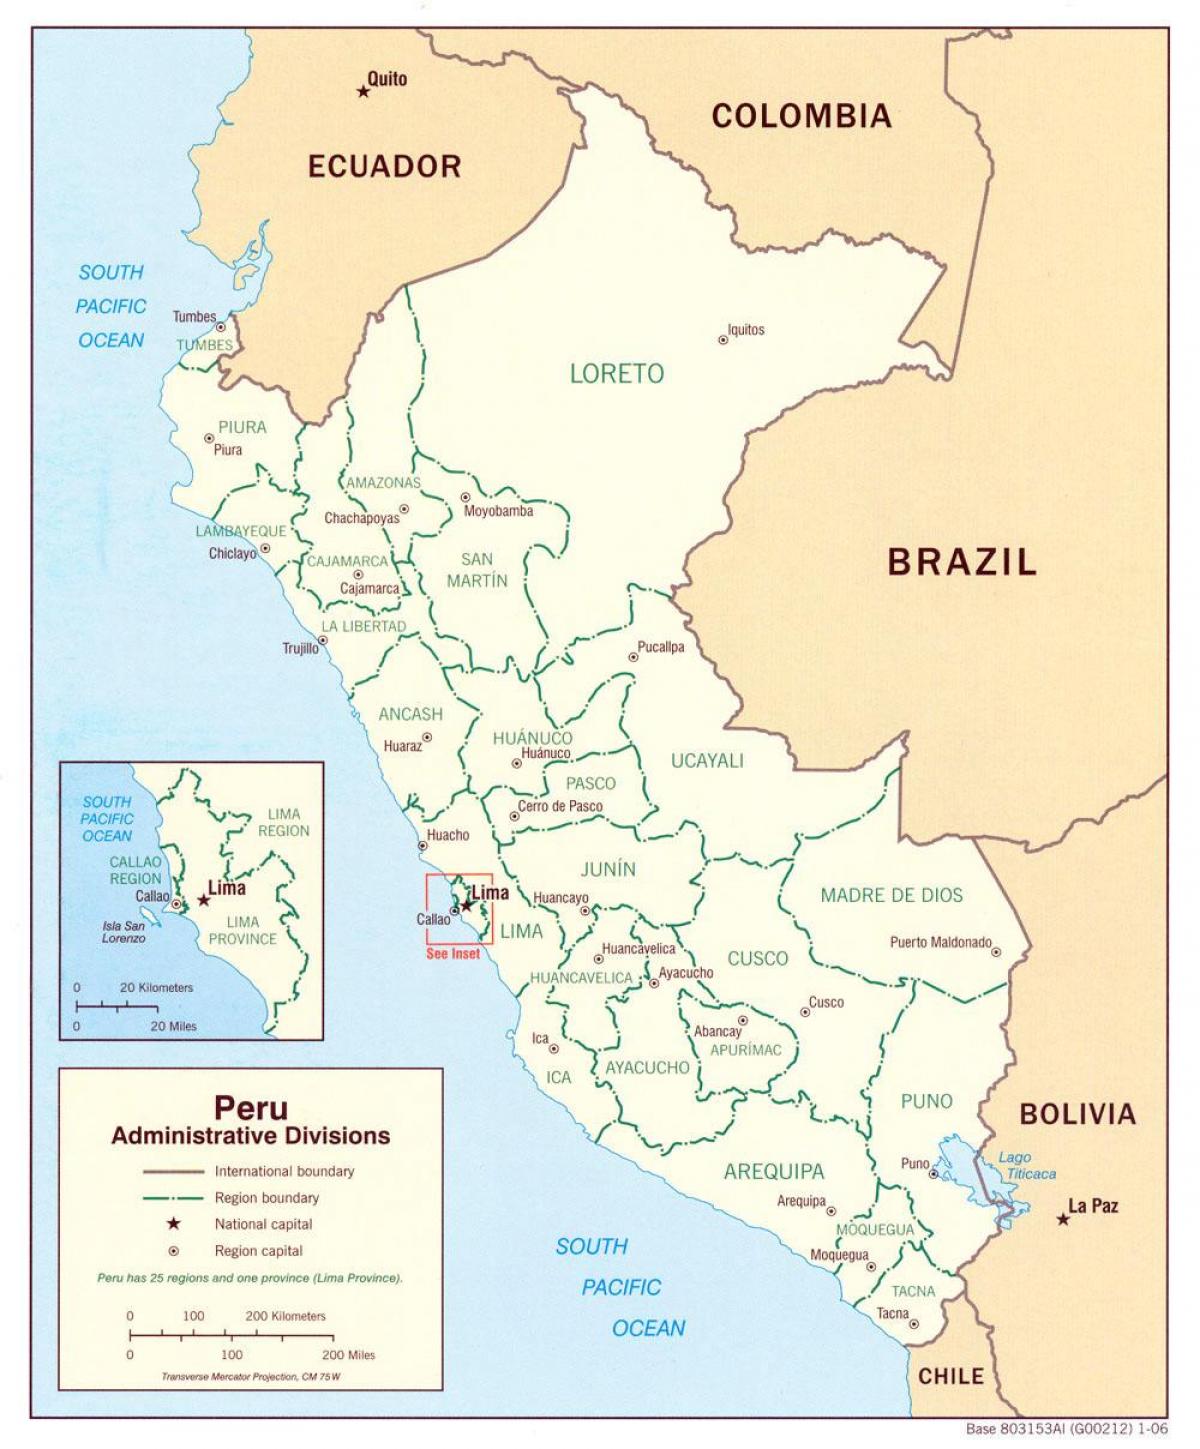 kart som viser Peru